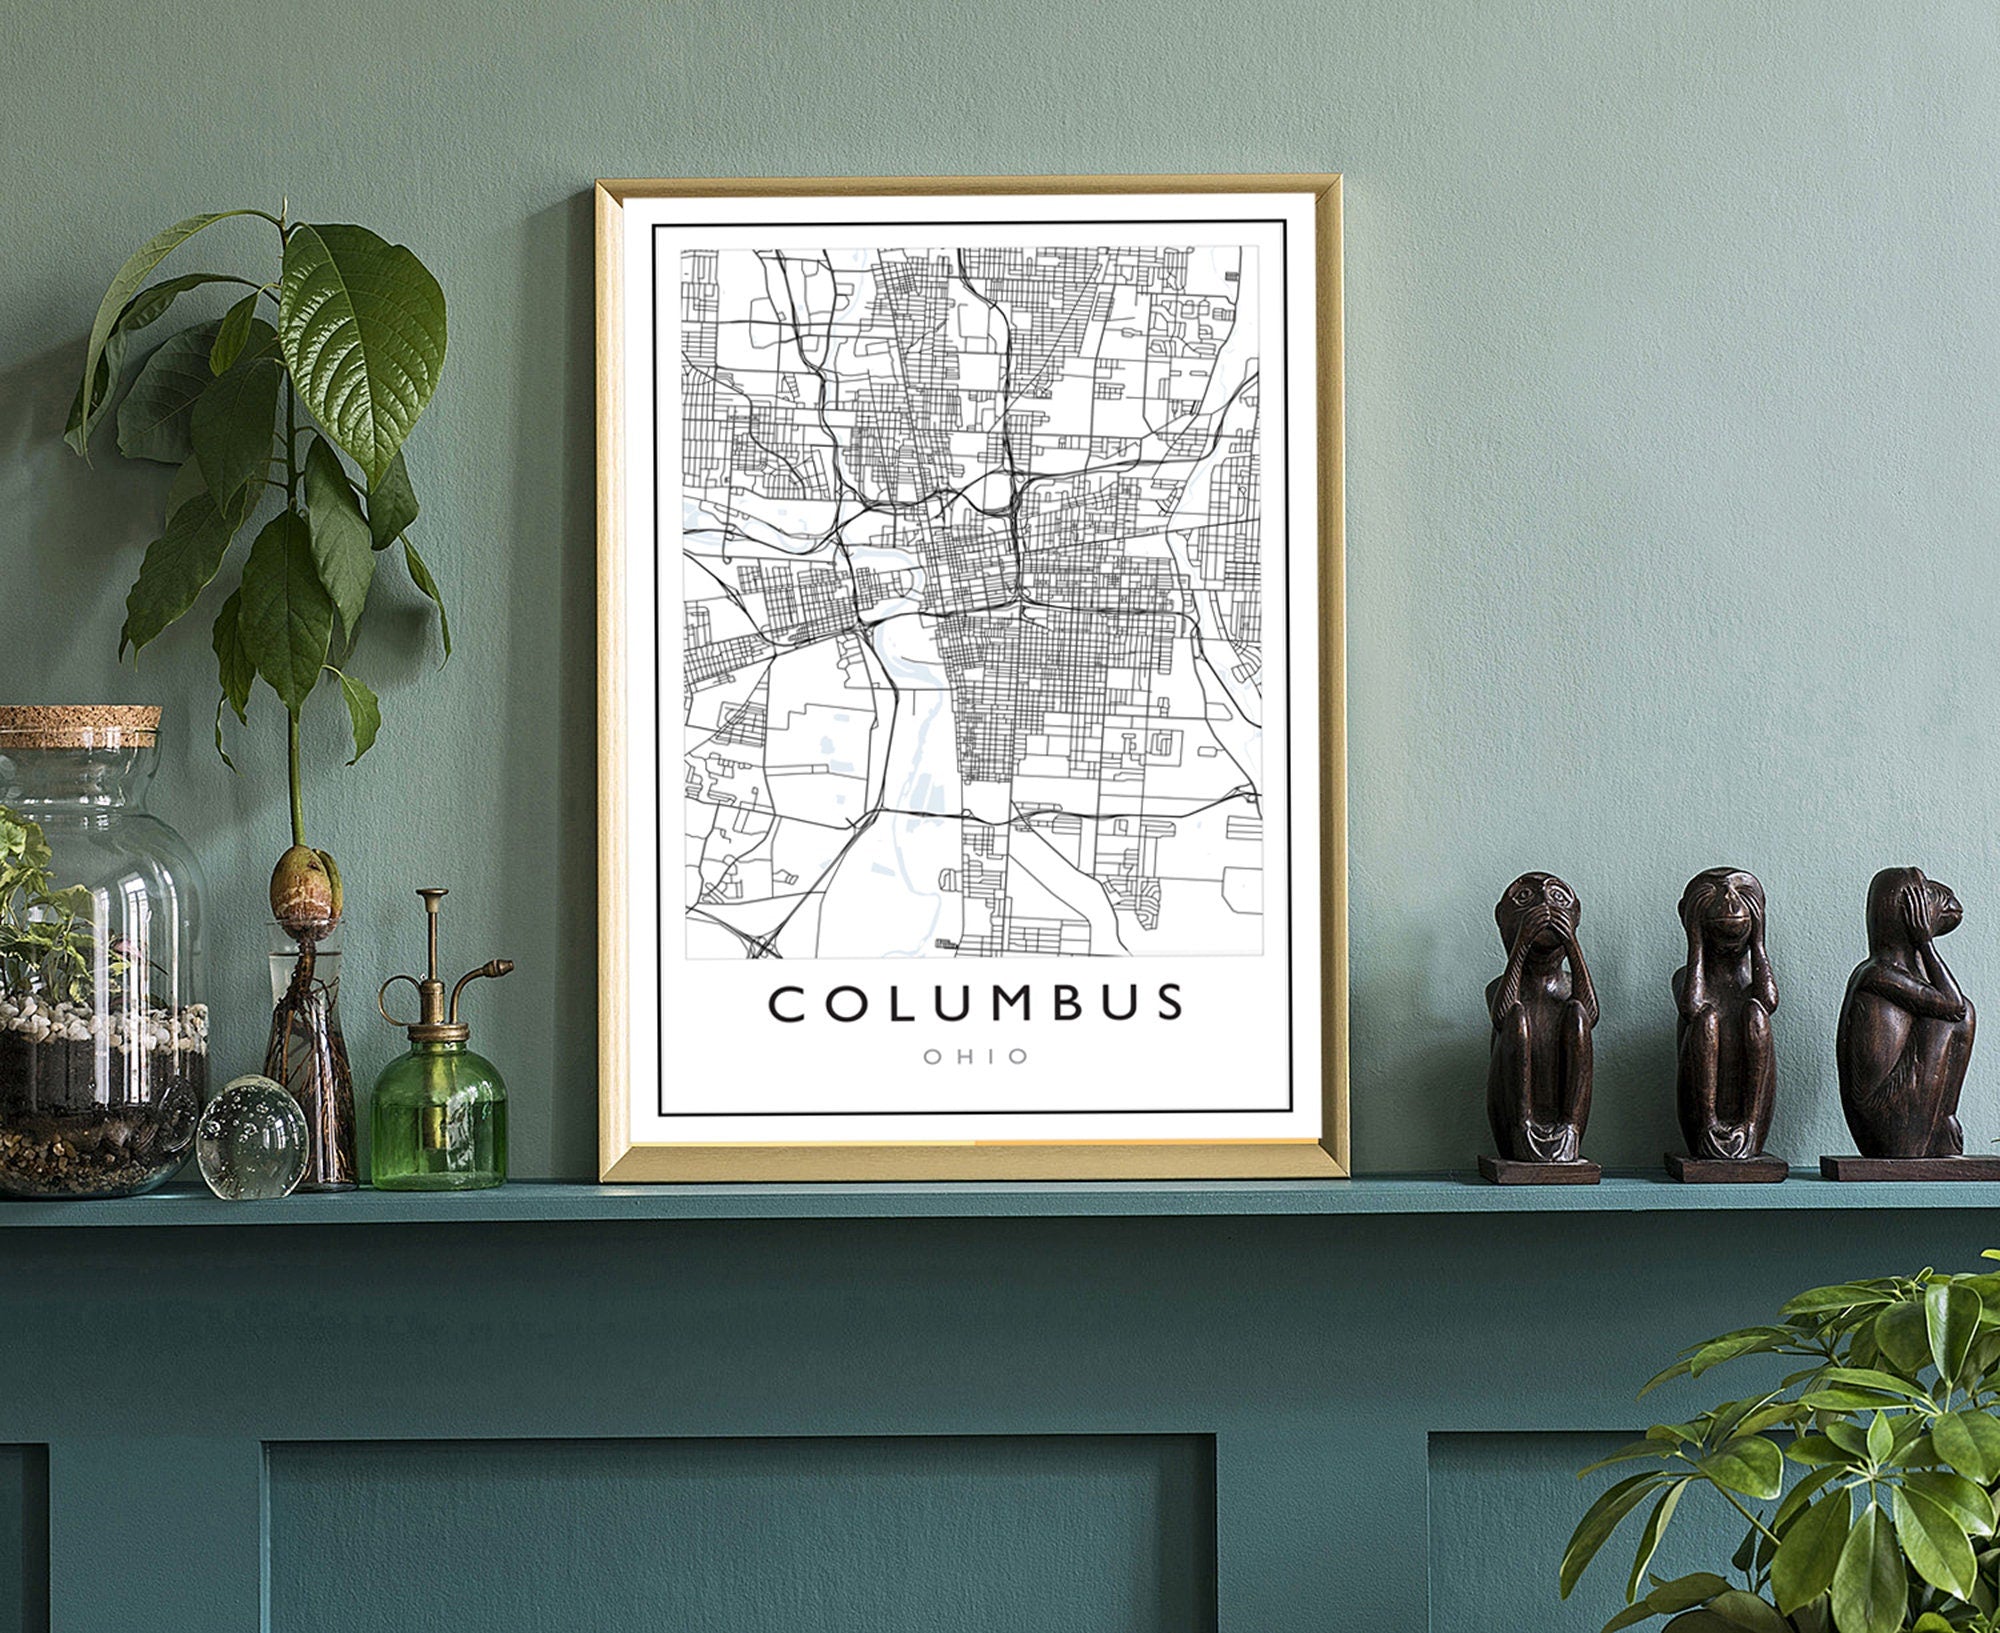 Columbus Ohio City Map, Columbus City Road Map Poster, Ohio City Street Map Print, Modern US City Map, Home Art Decor, Office Wall Art Print